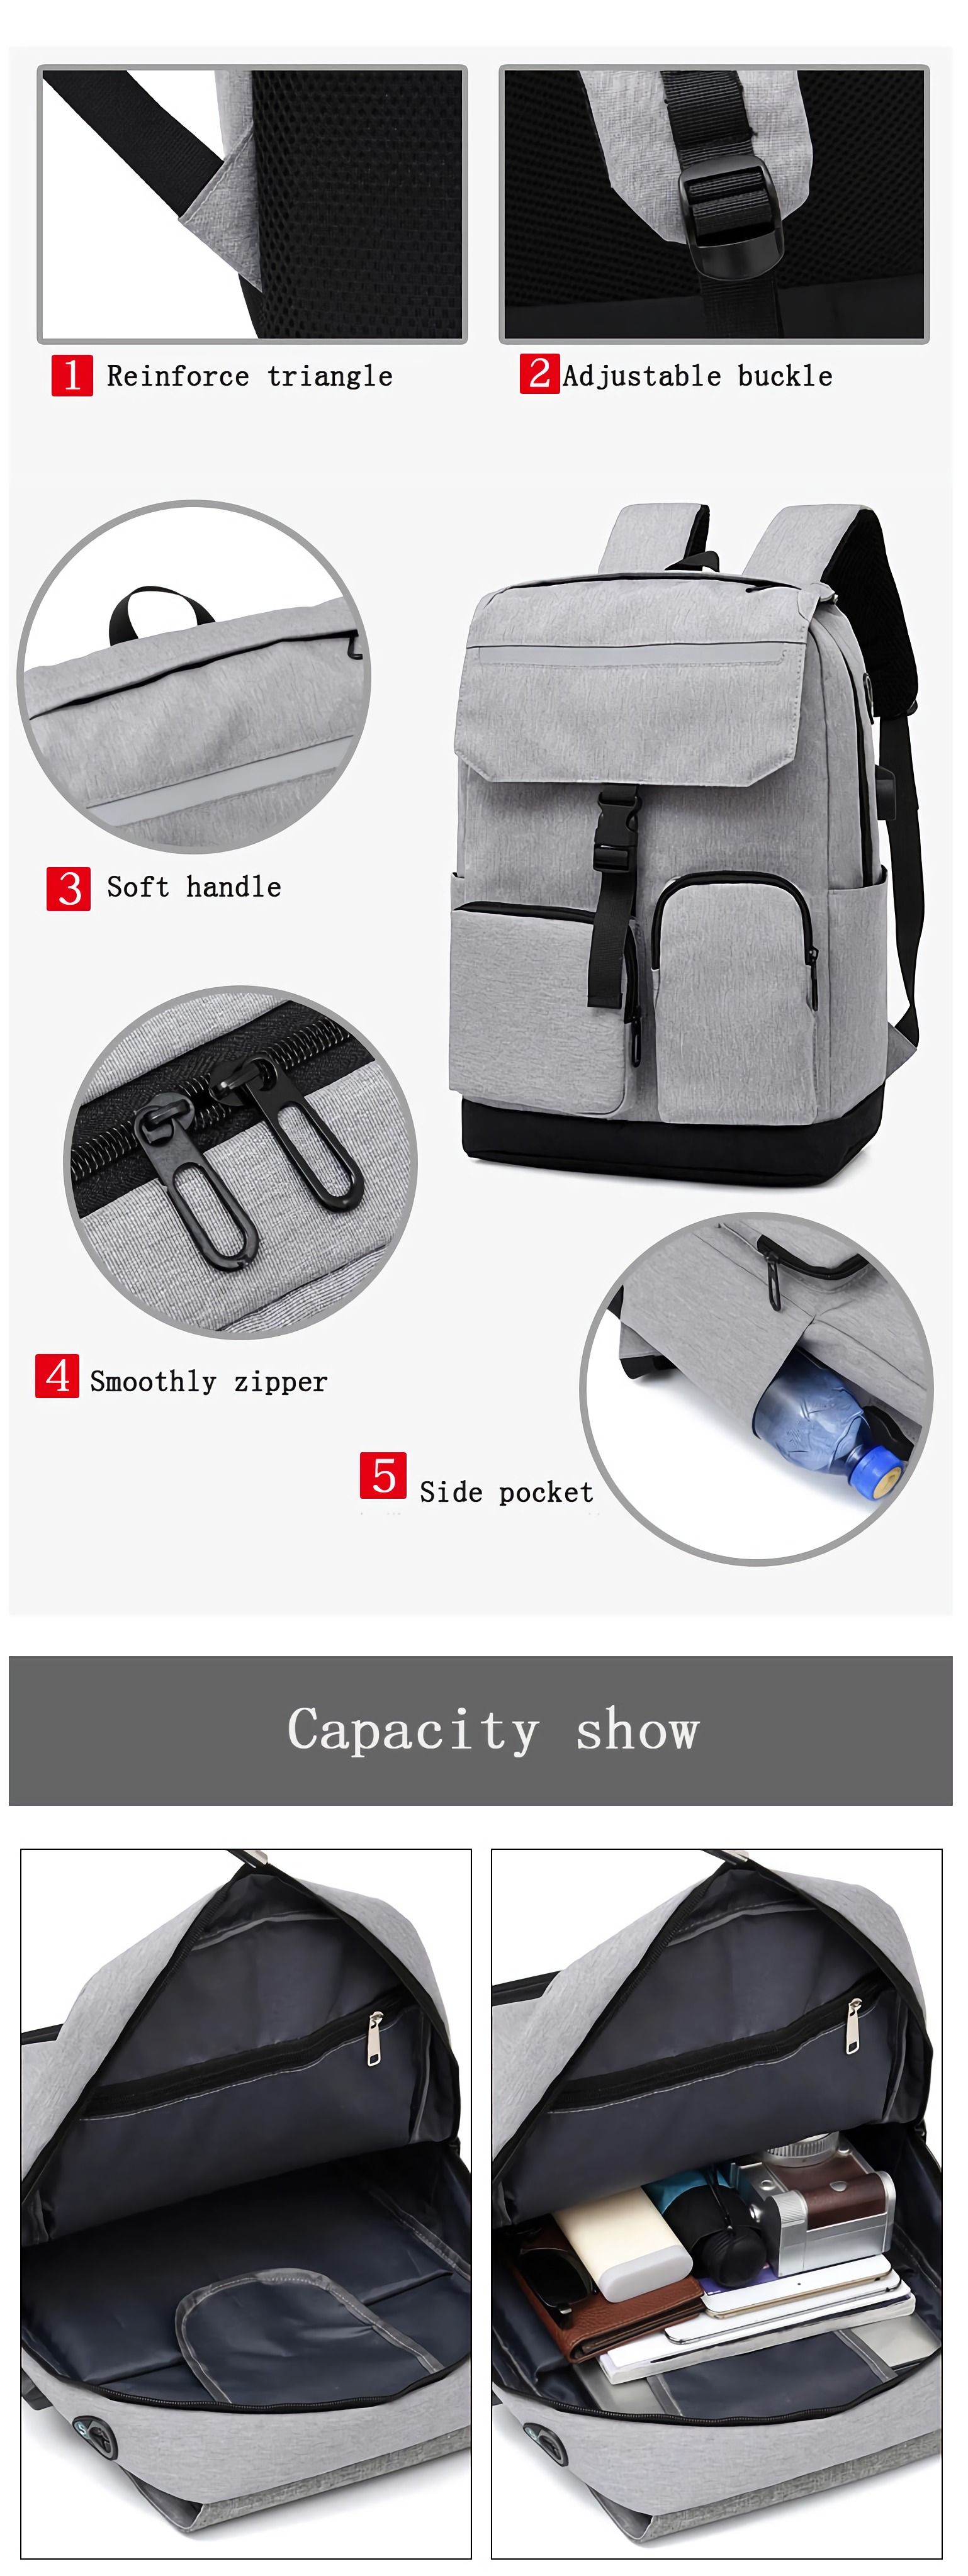 156-inch-Laptop-Bag-with-USB-Charging-Port-Reflective-Strip-Laptop-Backpack-for-Travel-School-Bag-1656971